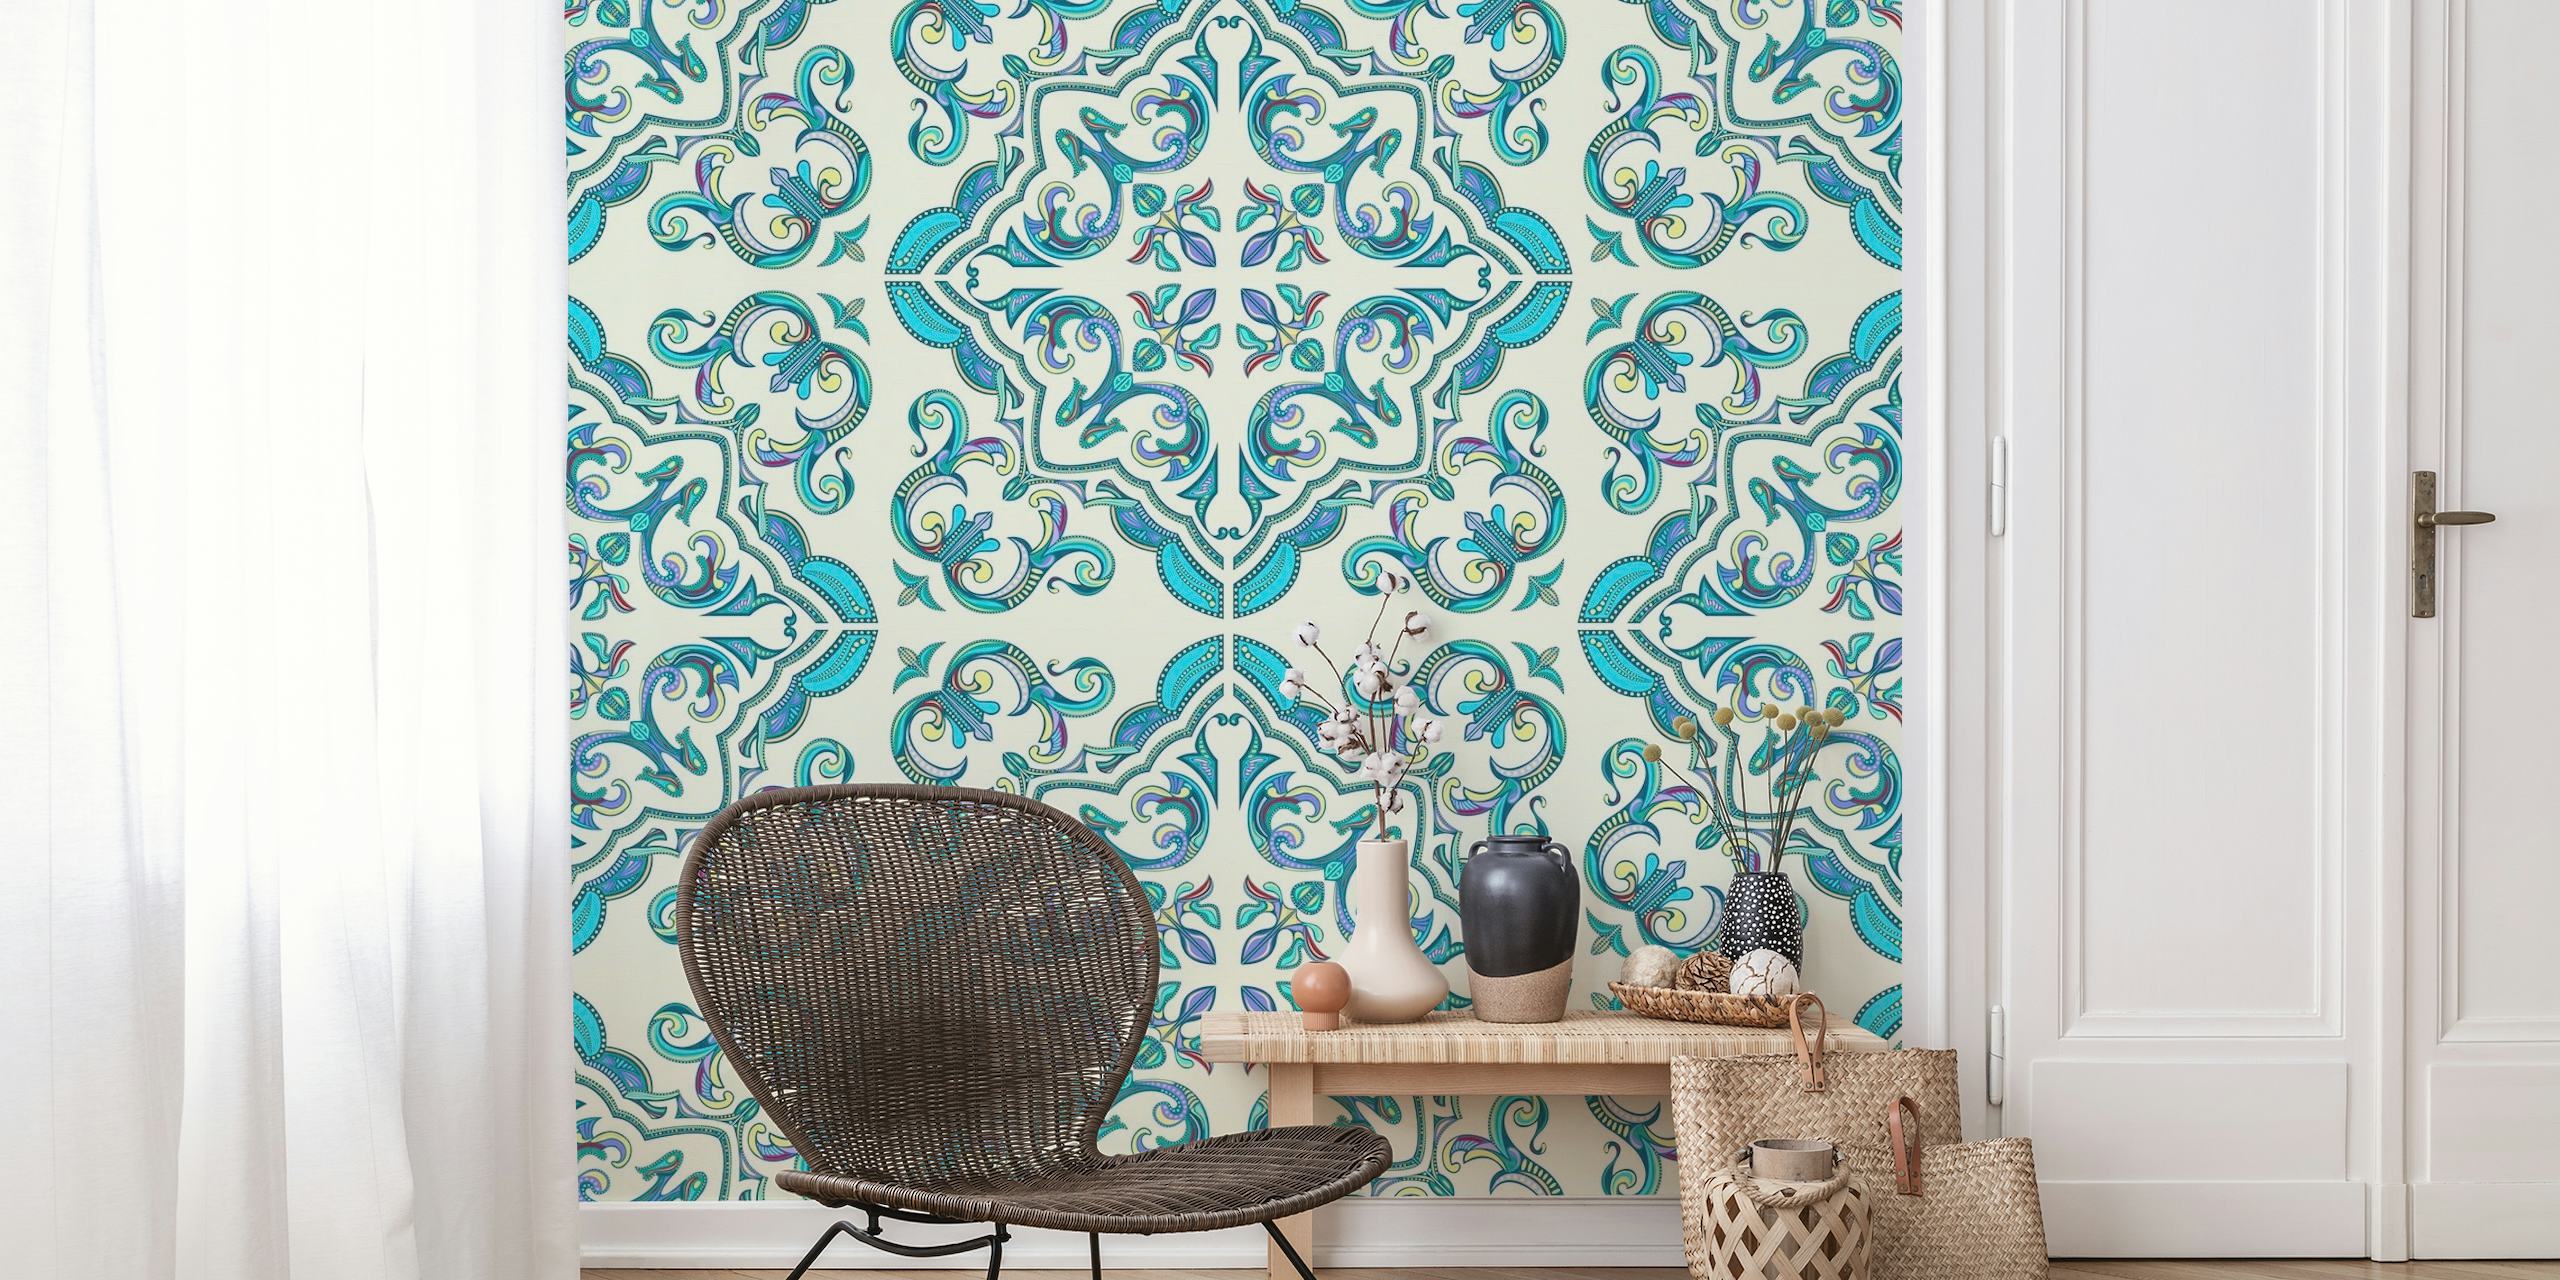 Boho Tiles in Vibrant Colors wallpaper